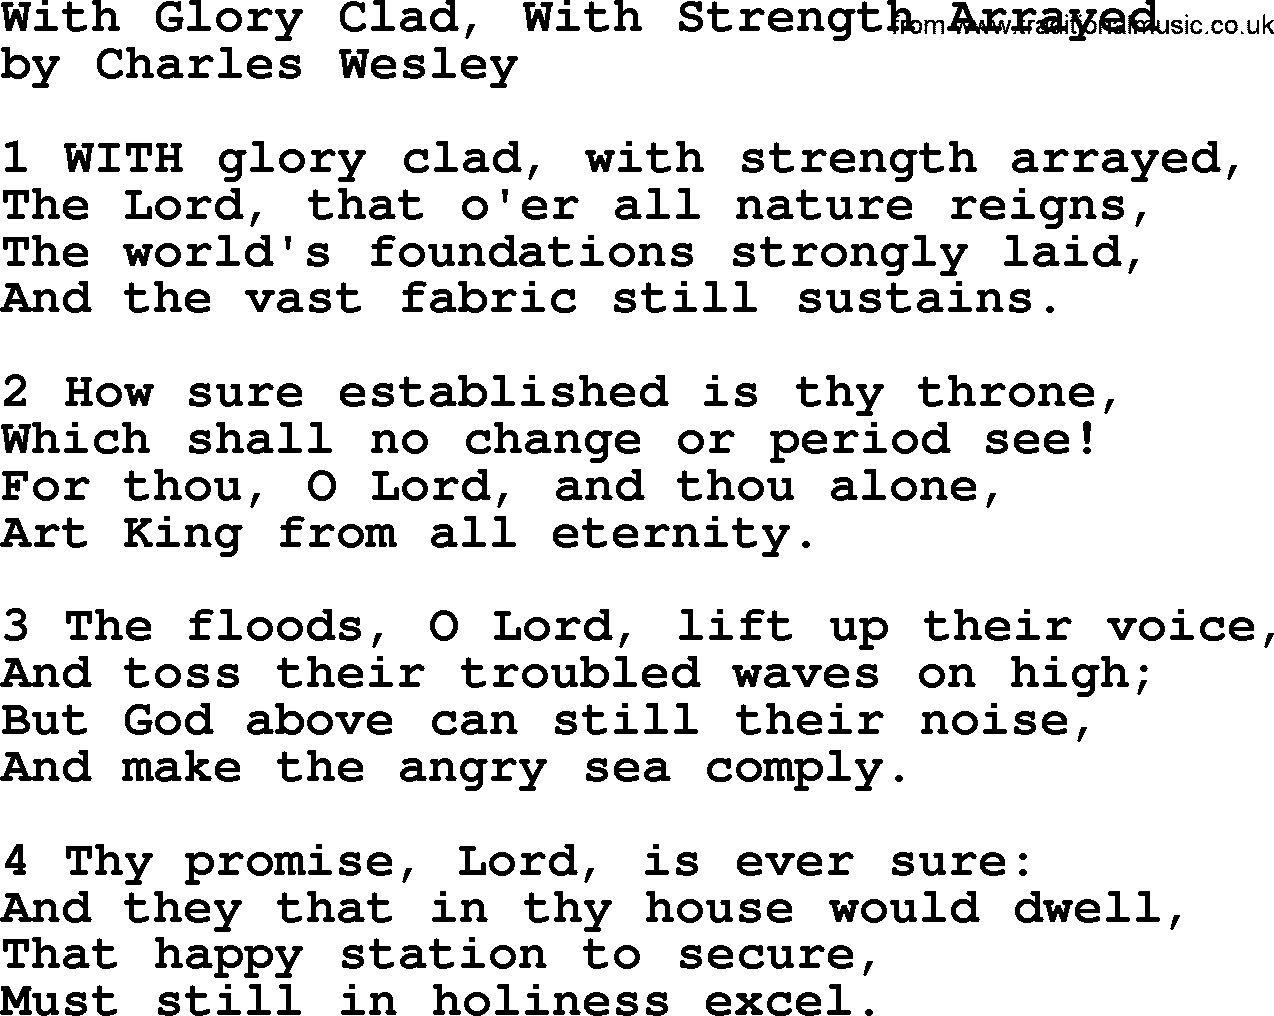 Charles Wesley hymn: With Glory Clad, With Strength Arrayed, lyrics